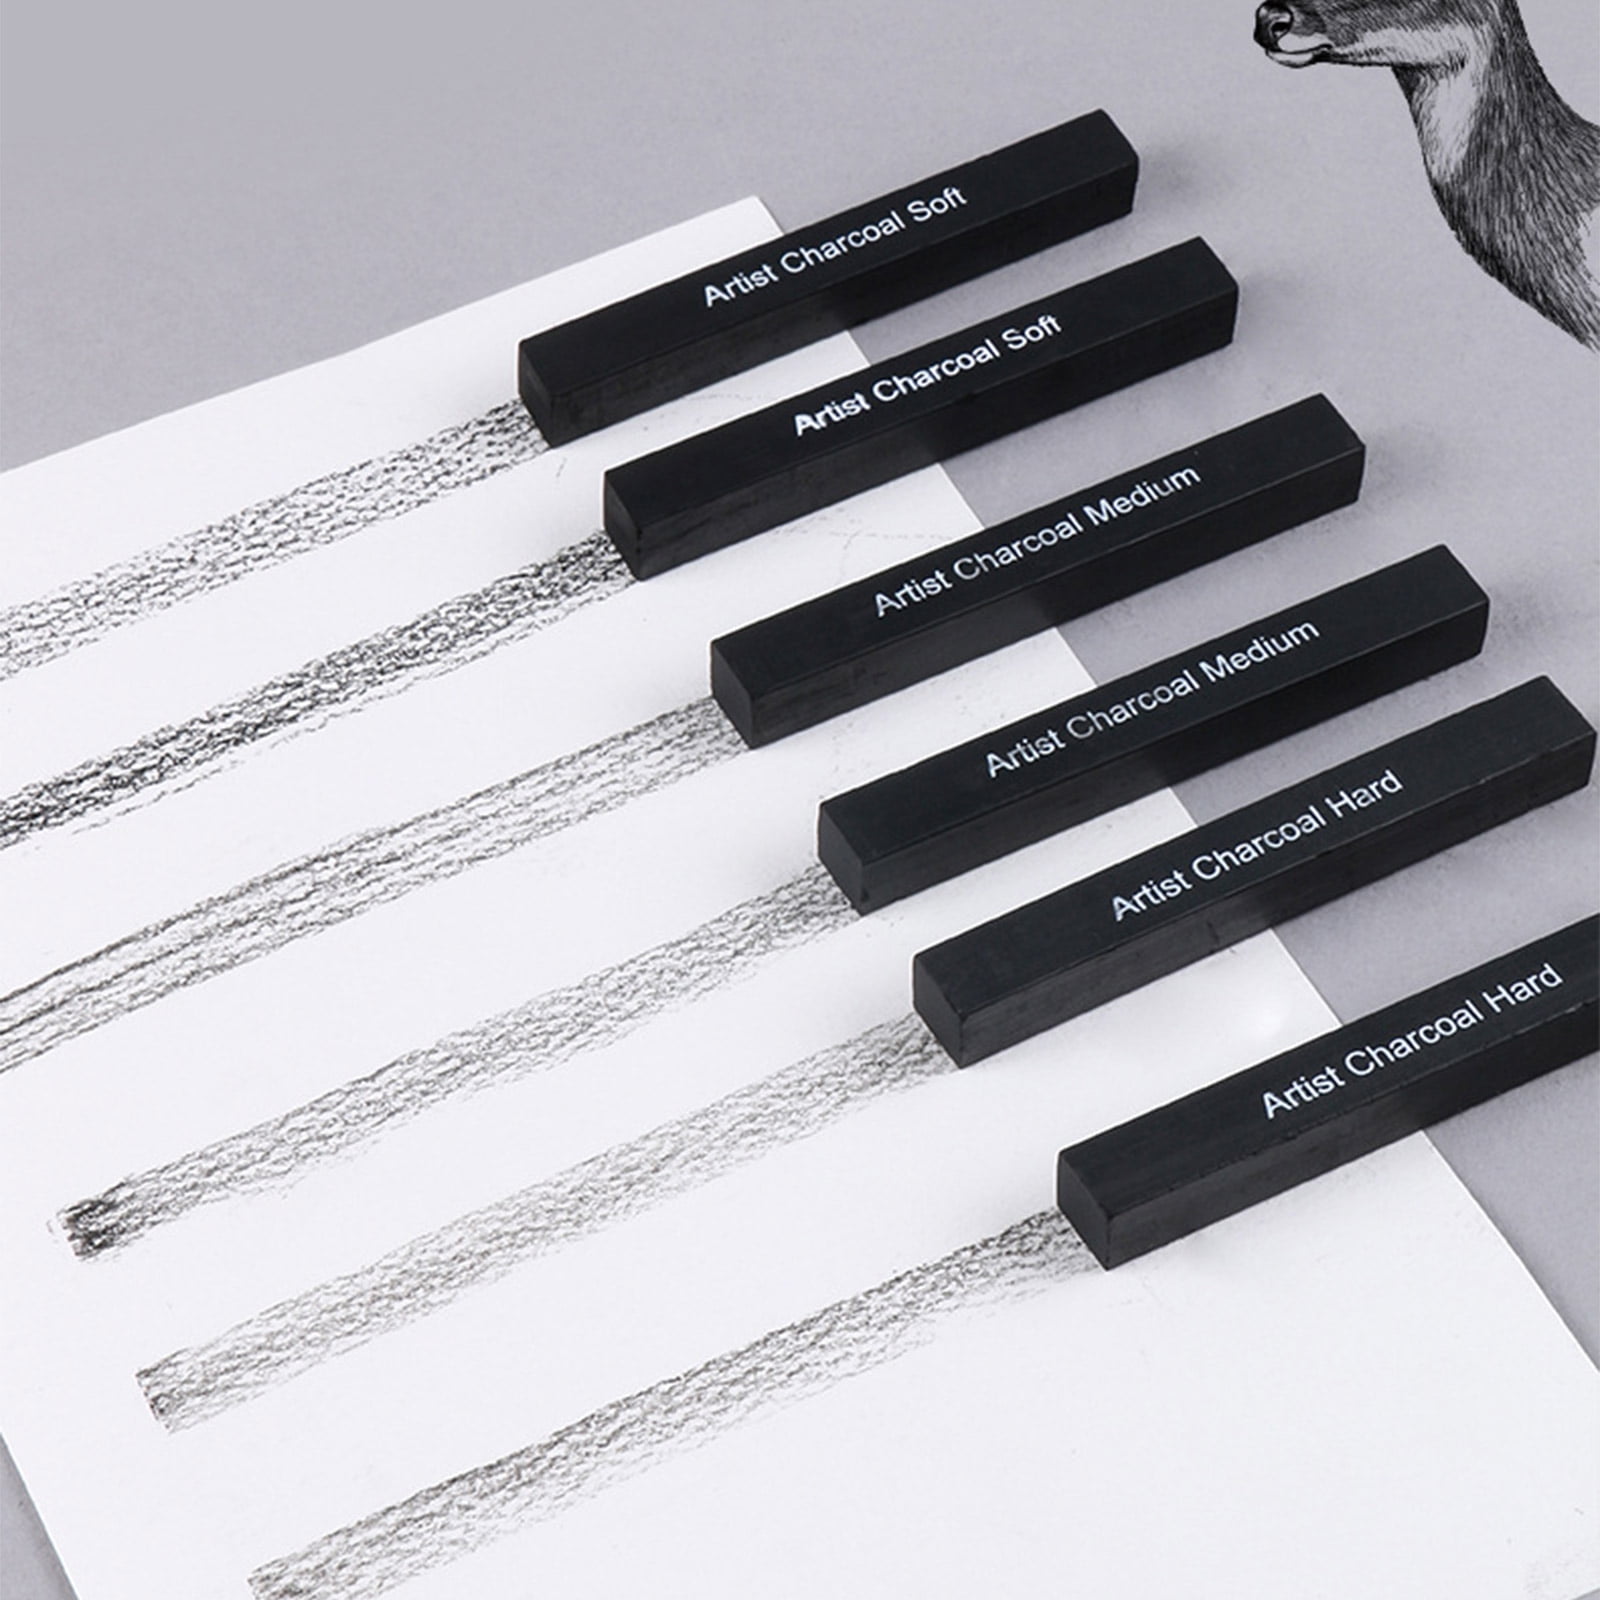 Huge Compressed Charcoal Sticks Set Soft Medium Hard Assorted Charcoal Pens  Artist Students Drawing Blending Shading Sketching Charcoal Pencils Art